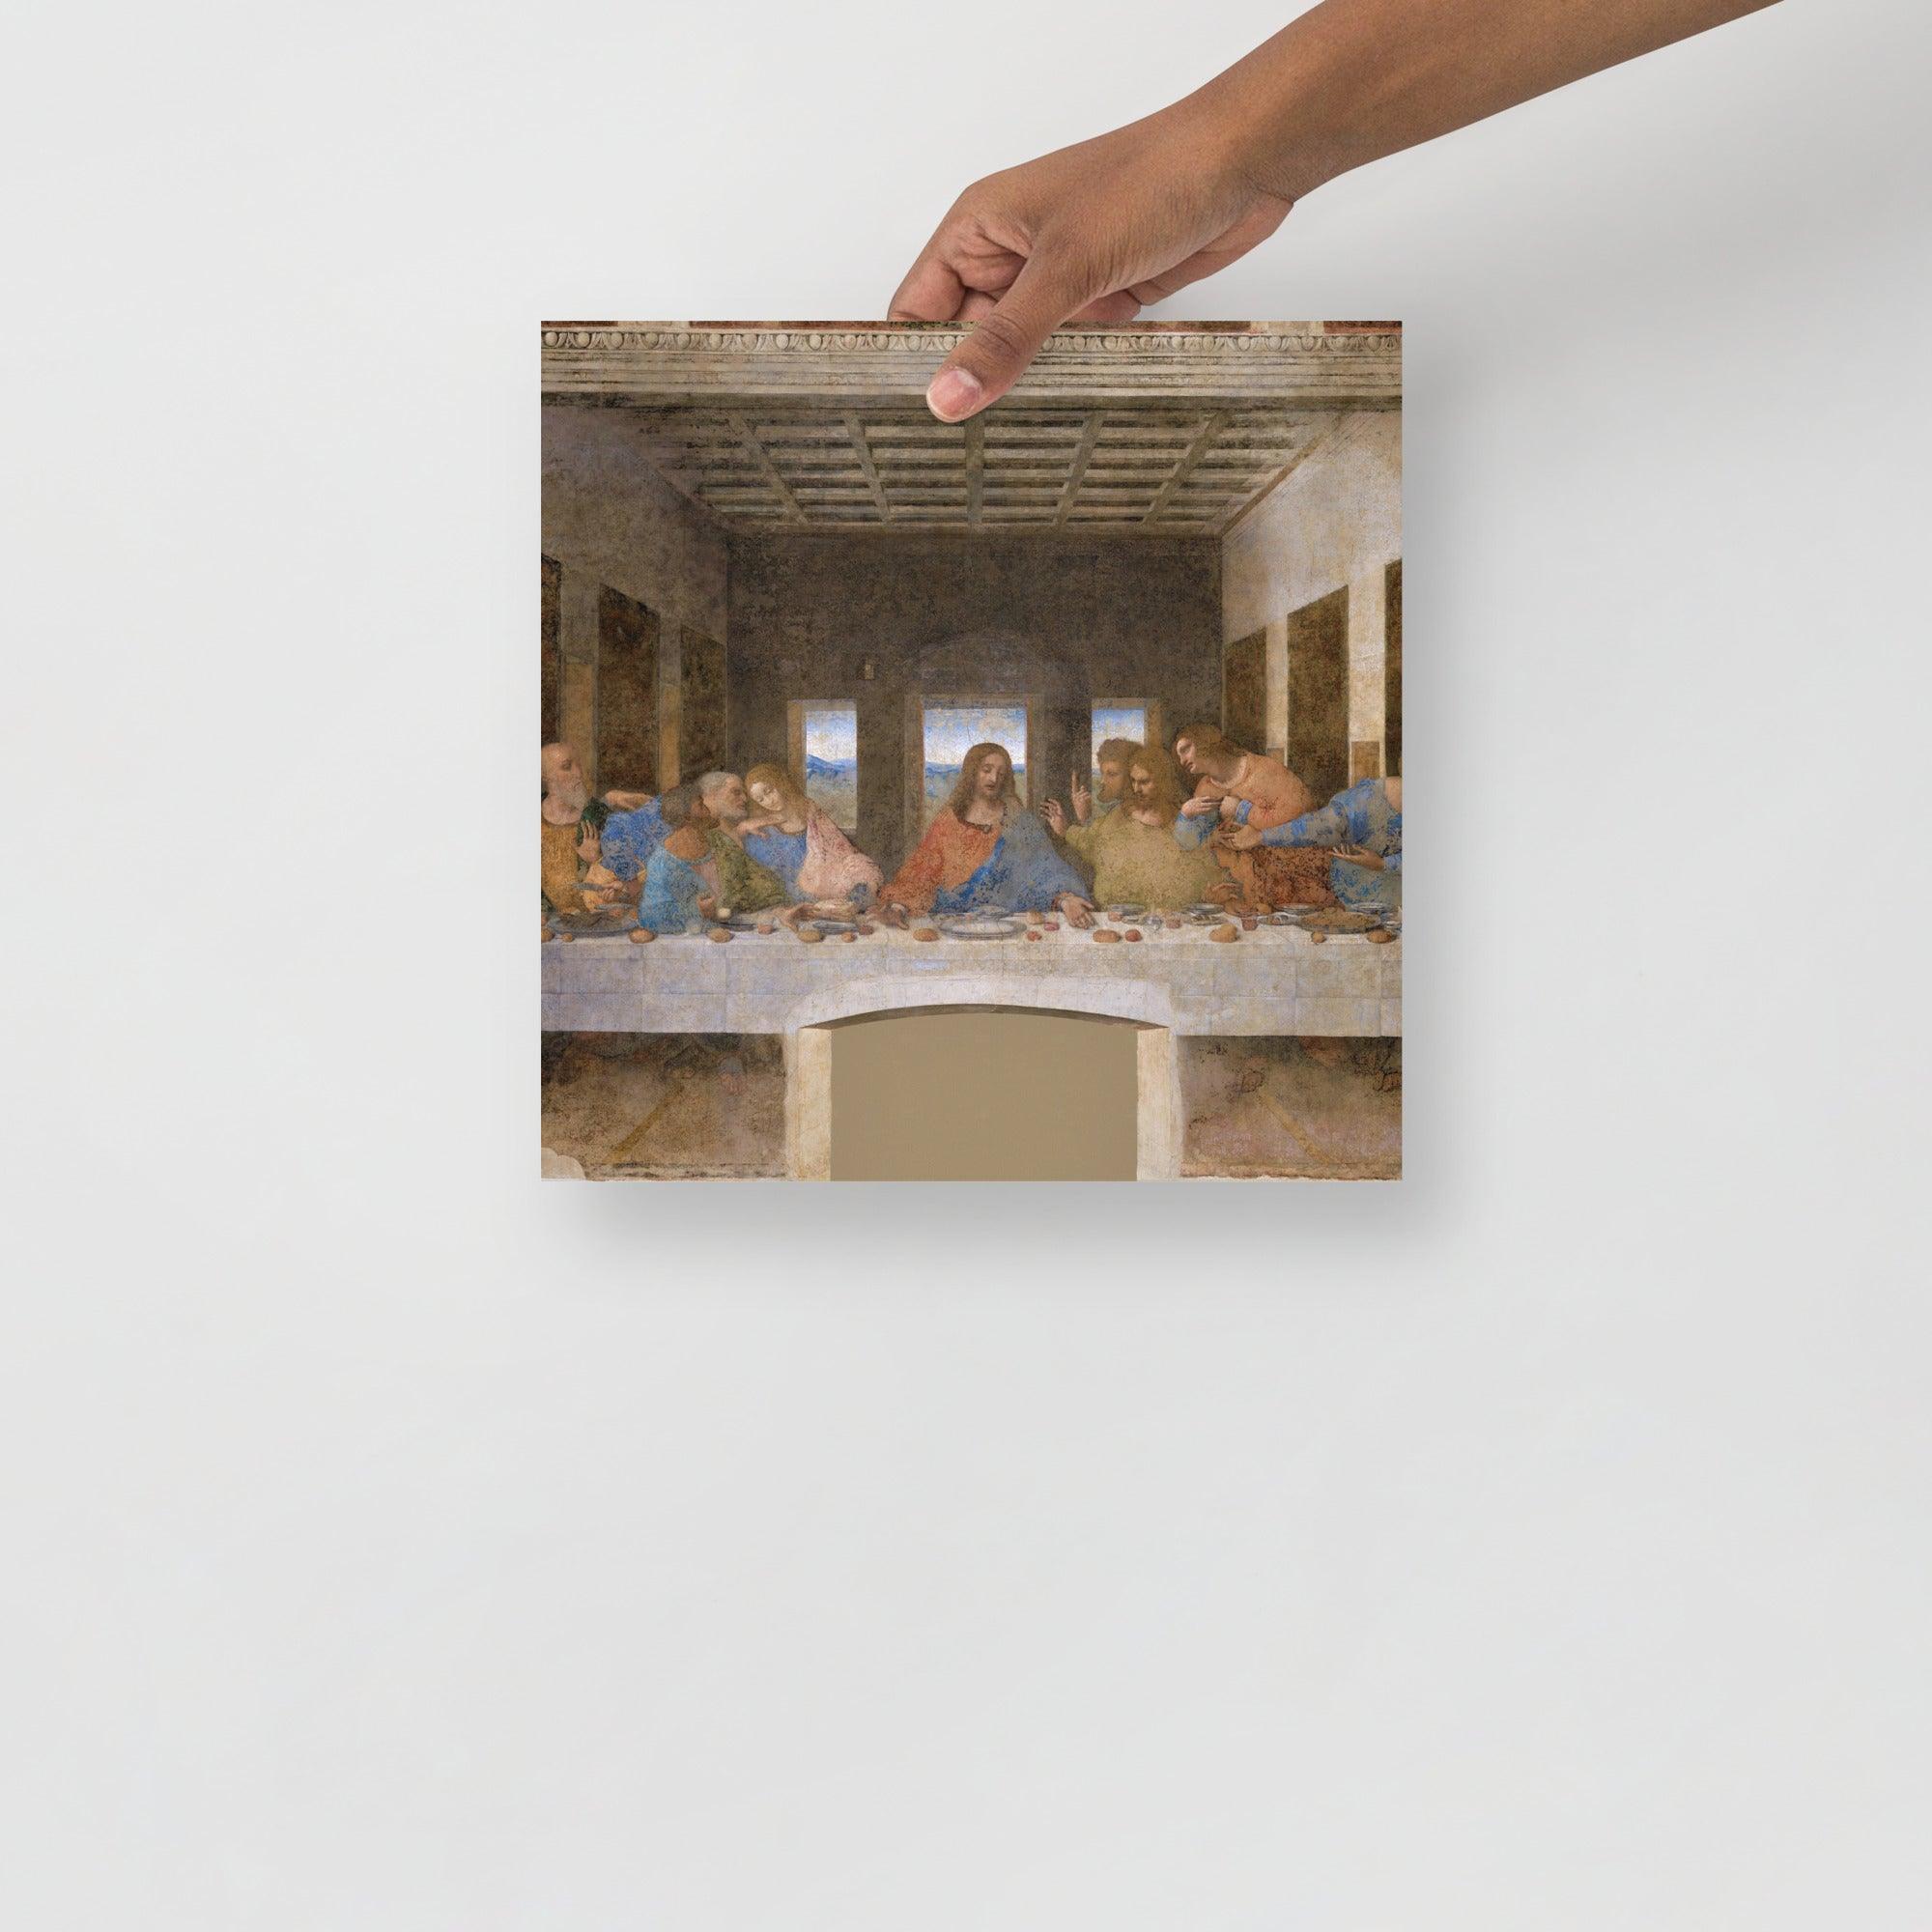 The Last Supper by Leonardo Da Vinci poster on a plain backdrop in size 12x12”.